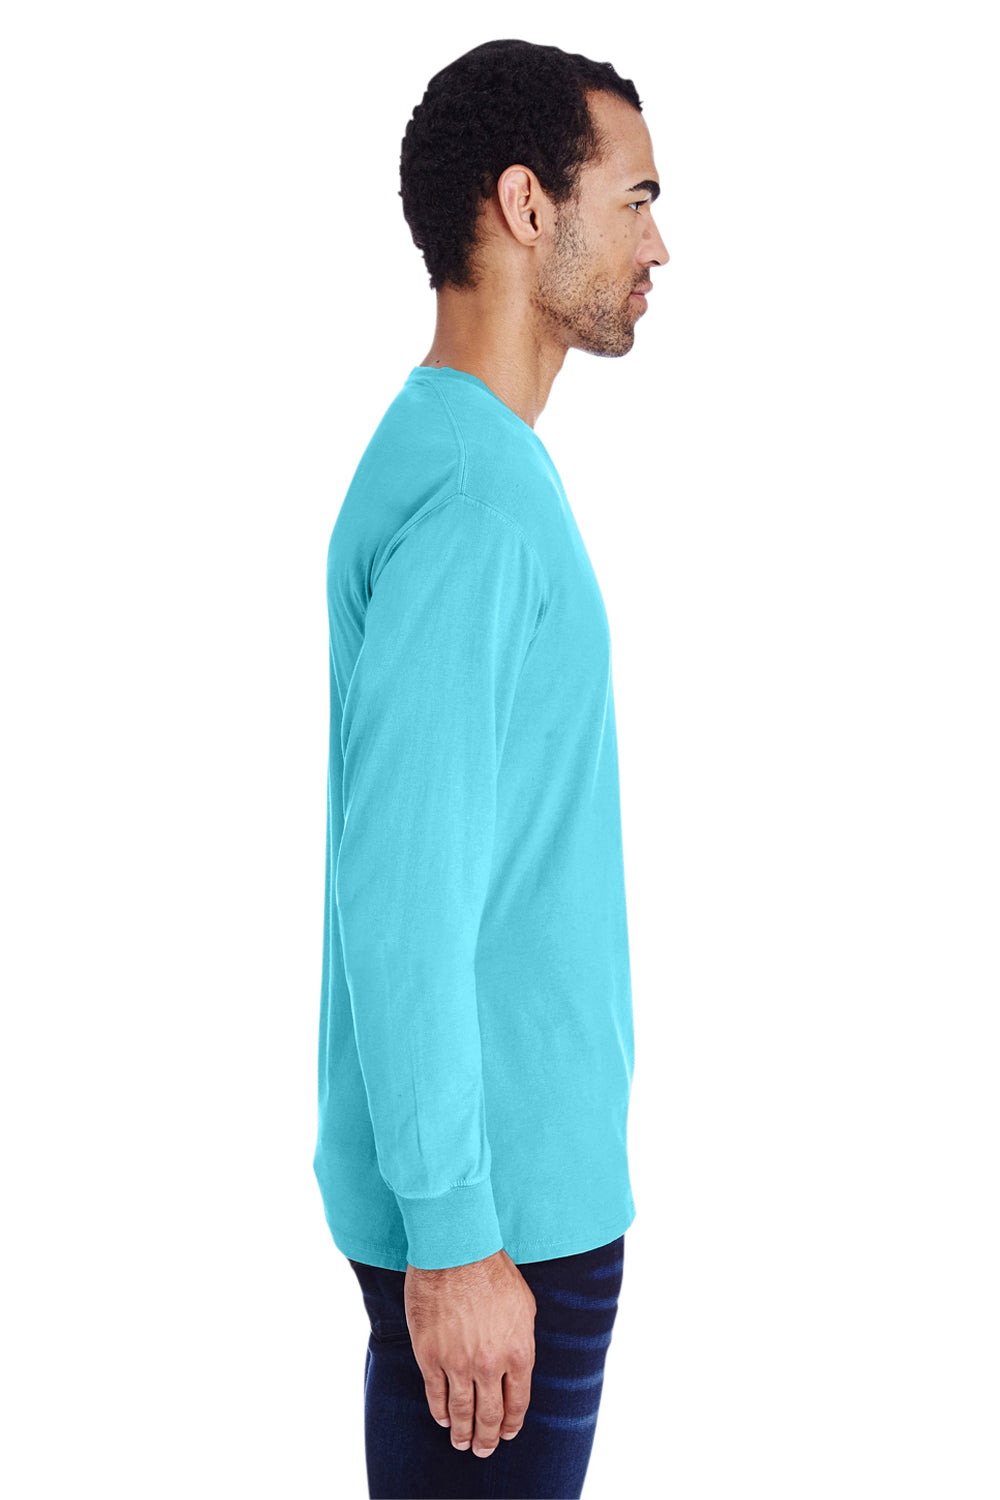 ComfortWash by Hanes GDH200 Long Sleeve Crewneck T-Shirt Freshwater Blue Side